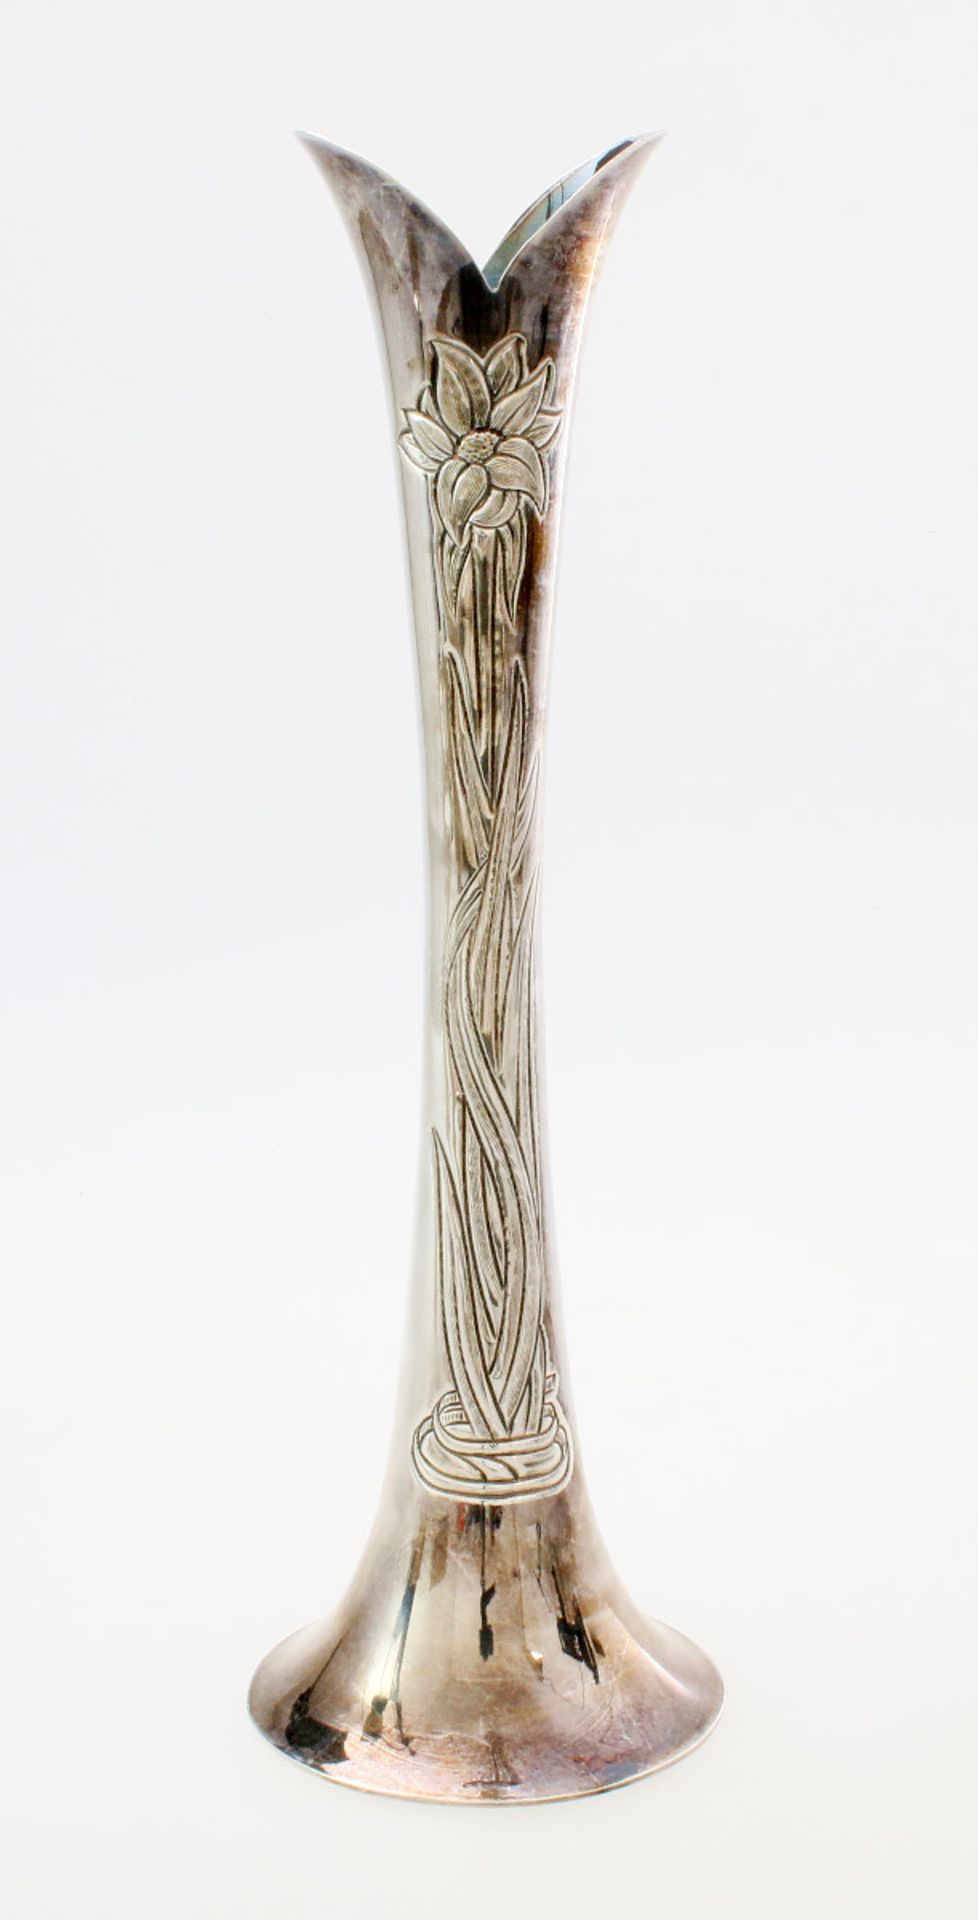 Silberne Vase - Vibec de Becci e Viola Antonio - ItalienUnterseite gestempelt 925er Silber, *